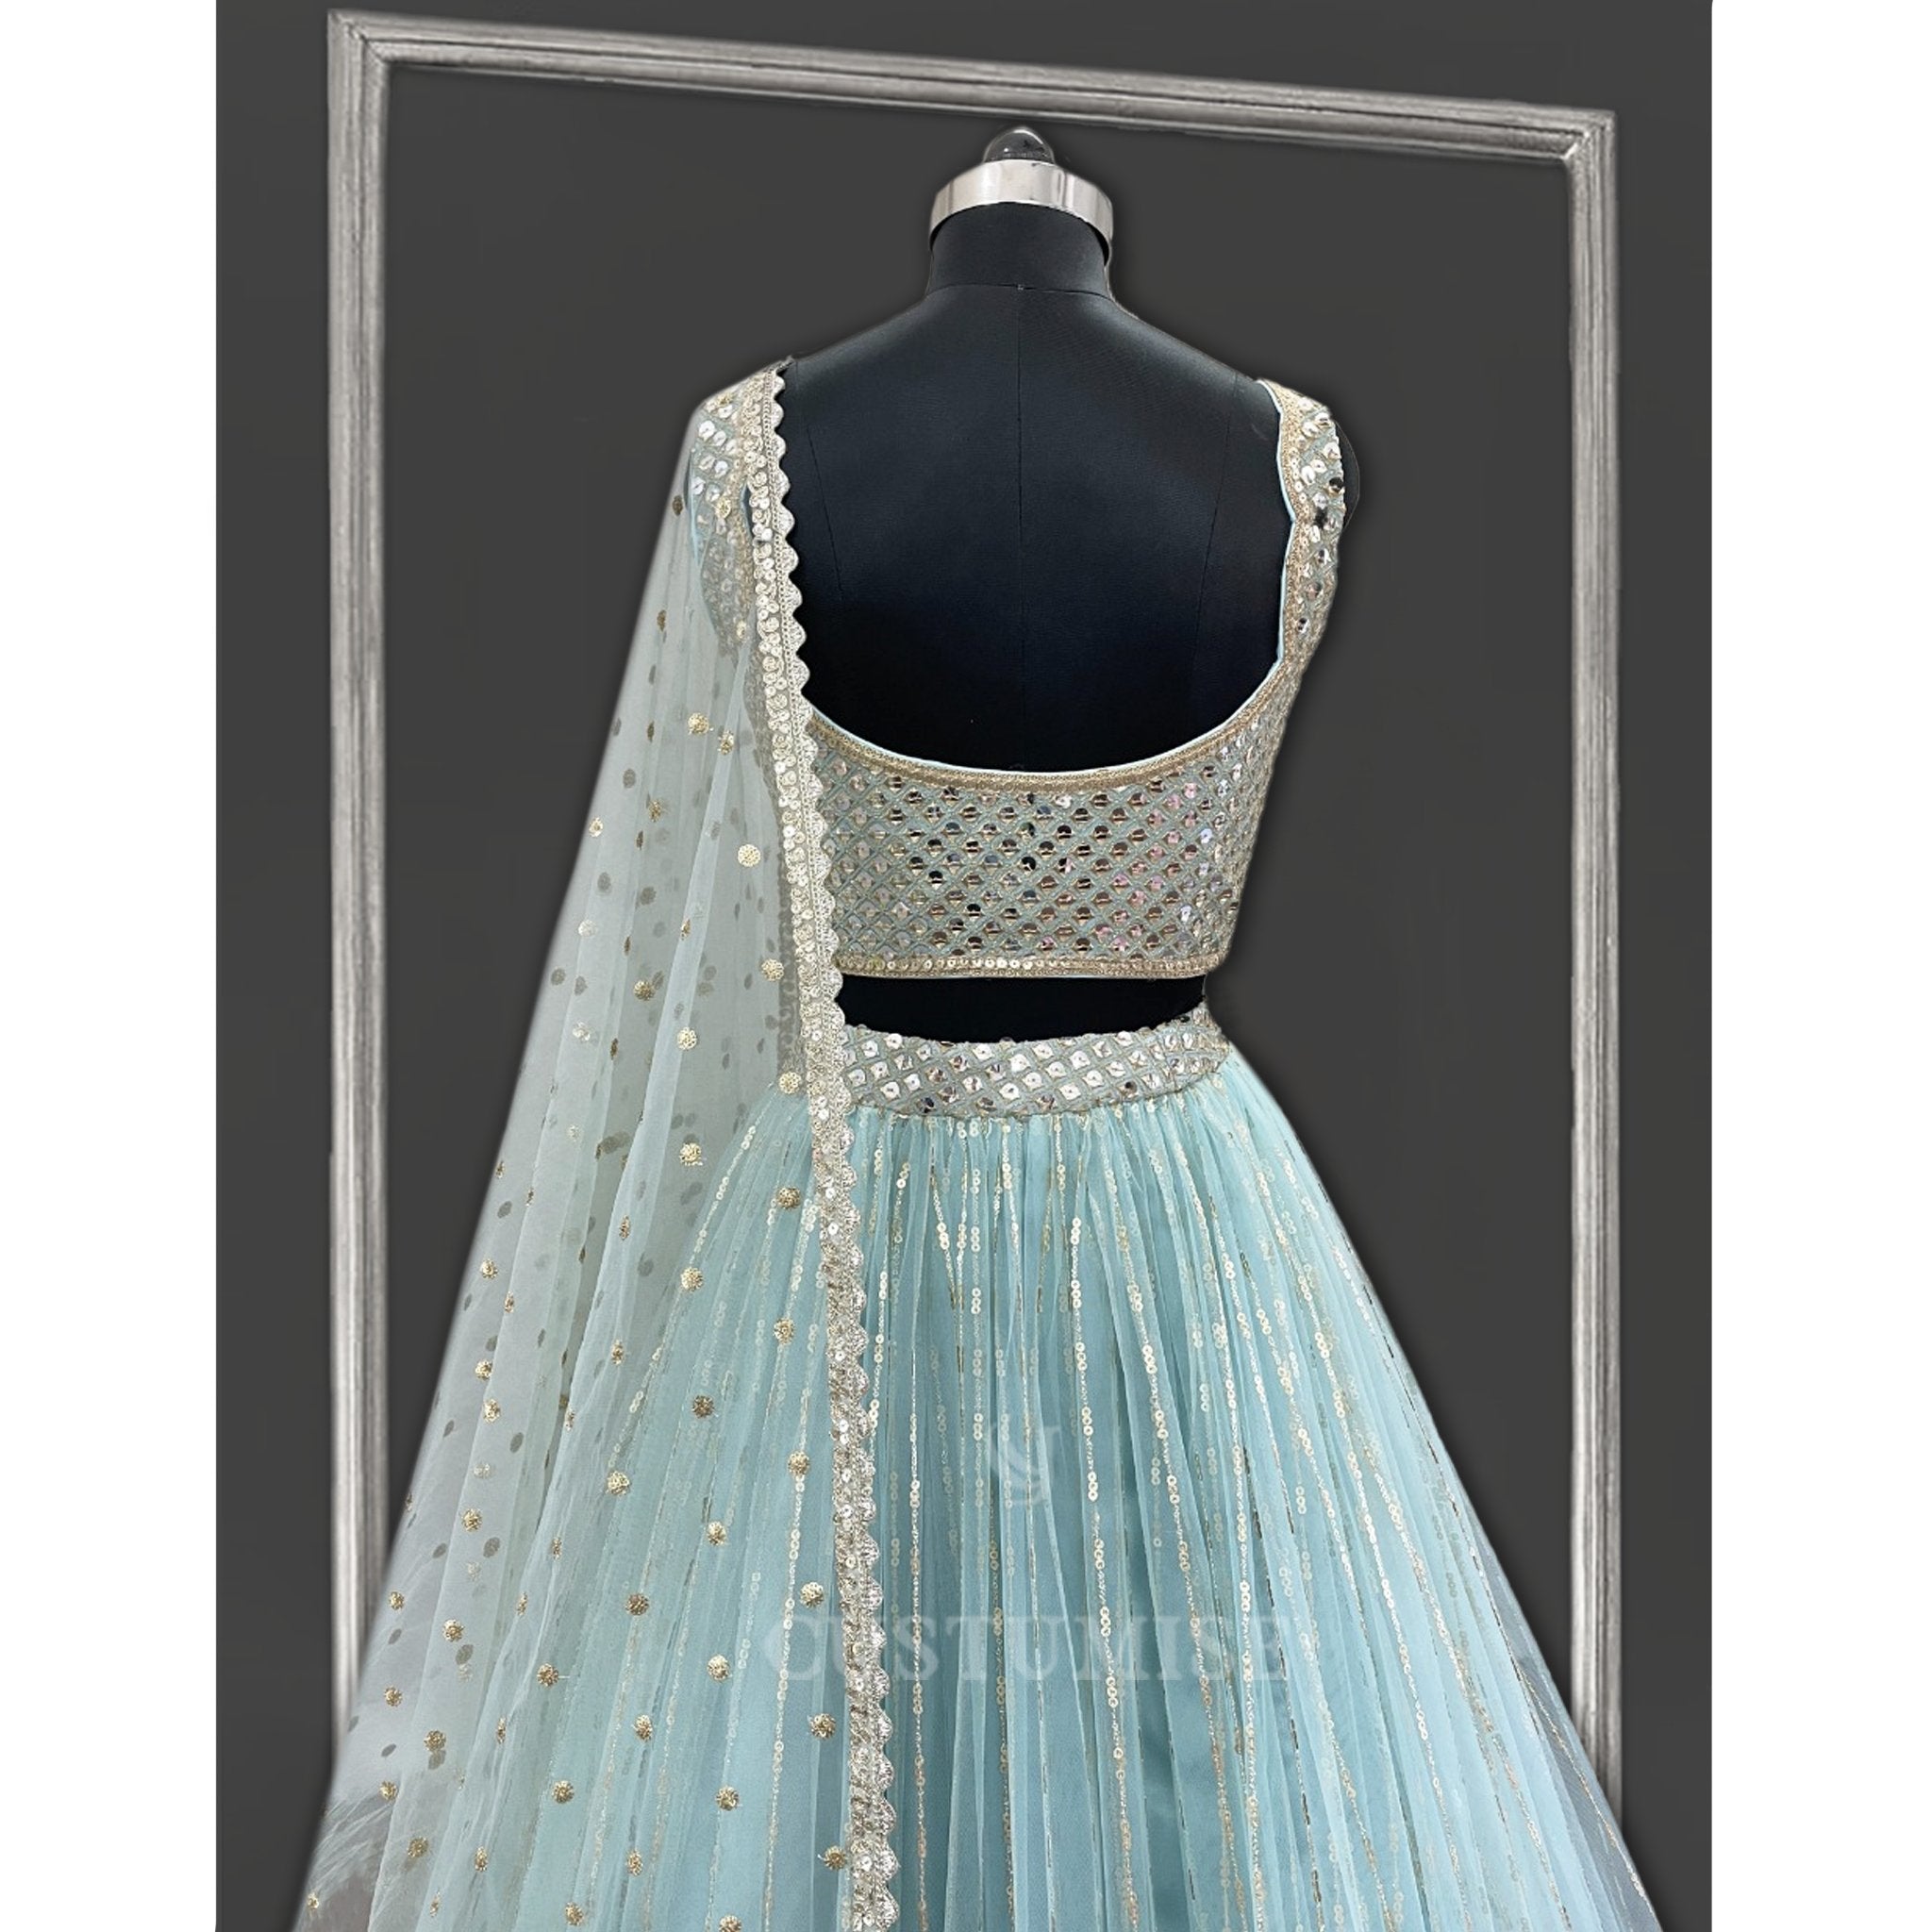 Powder Blue Lehenga set - Indian Designer Bridal Wedding Outfit